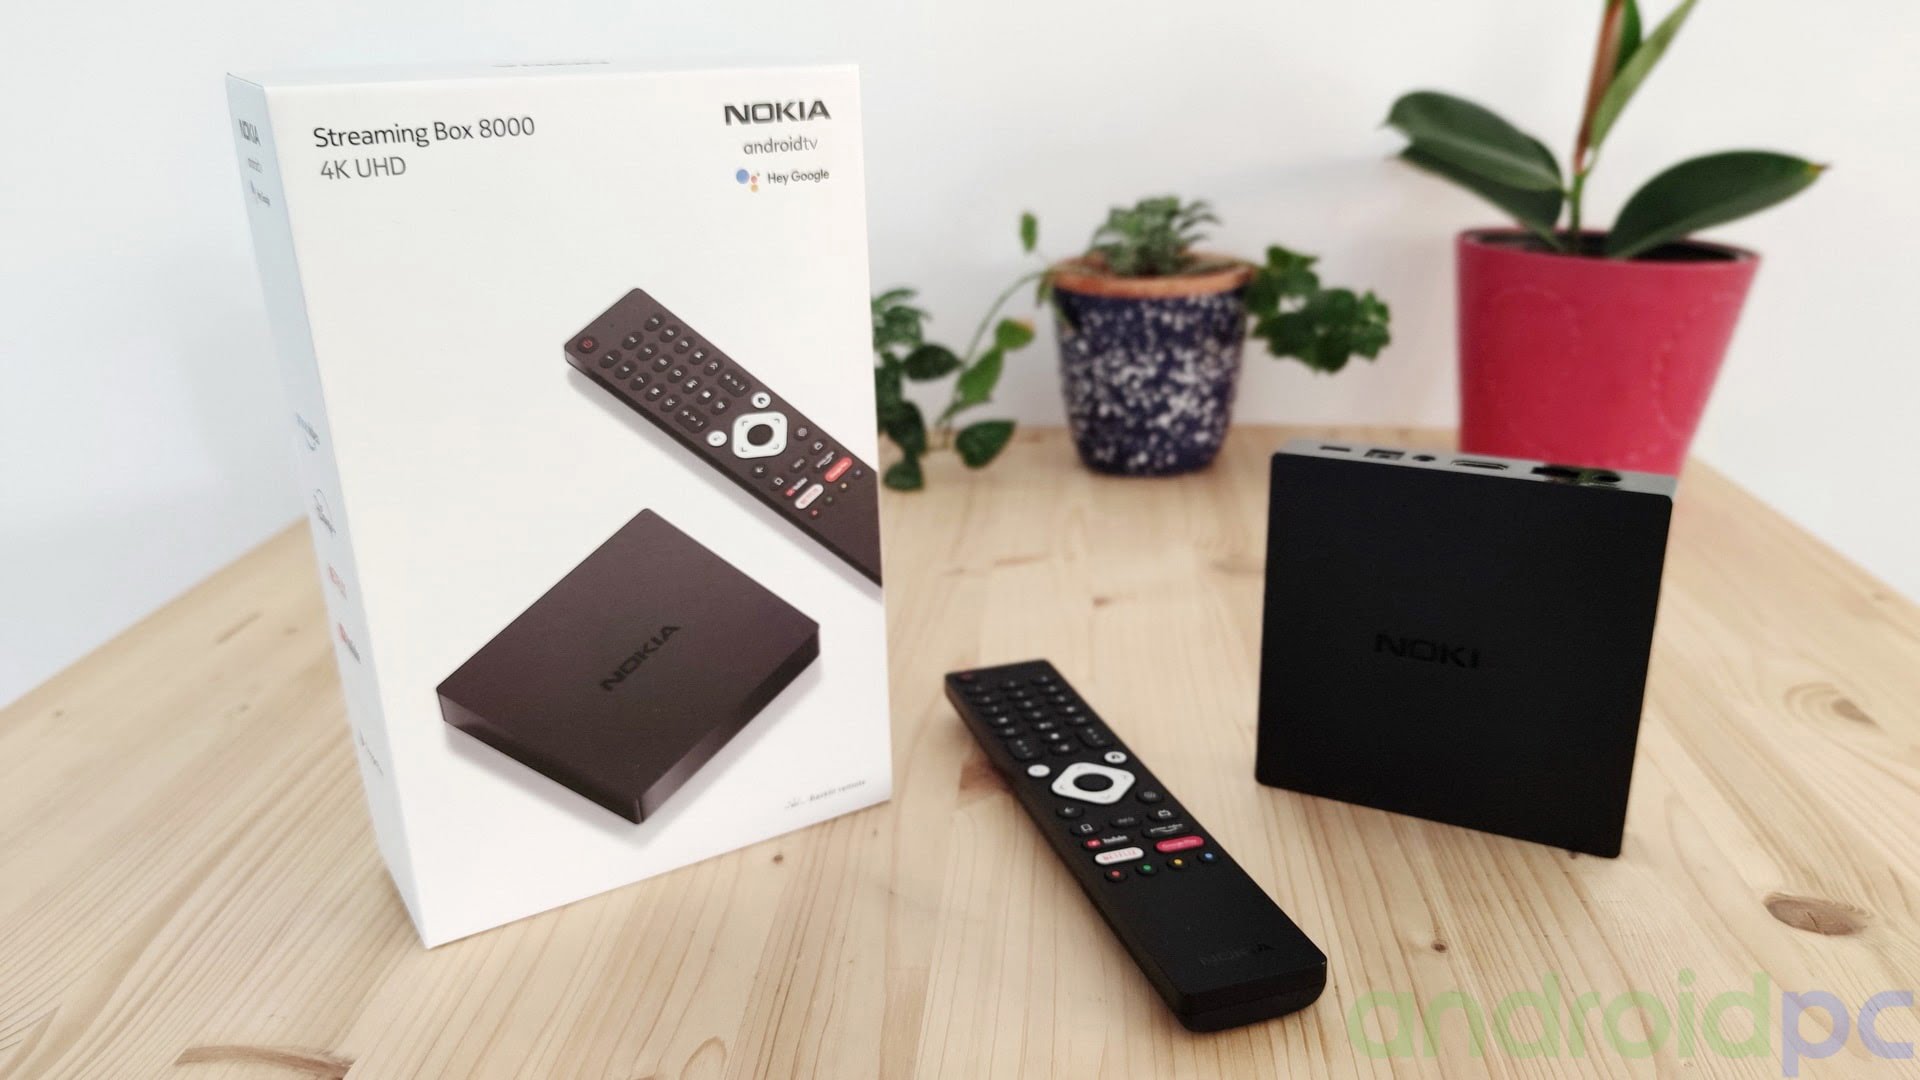 Nokia Streaming Box 8000  review